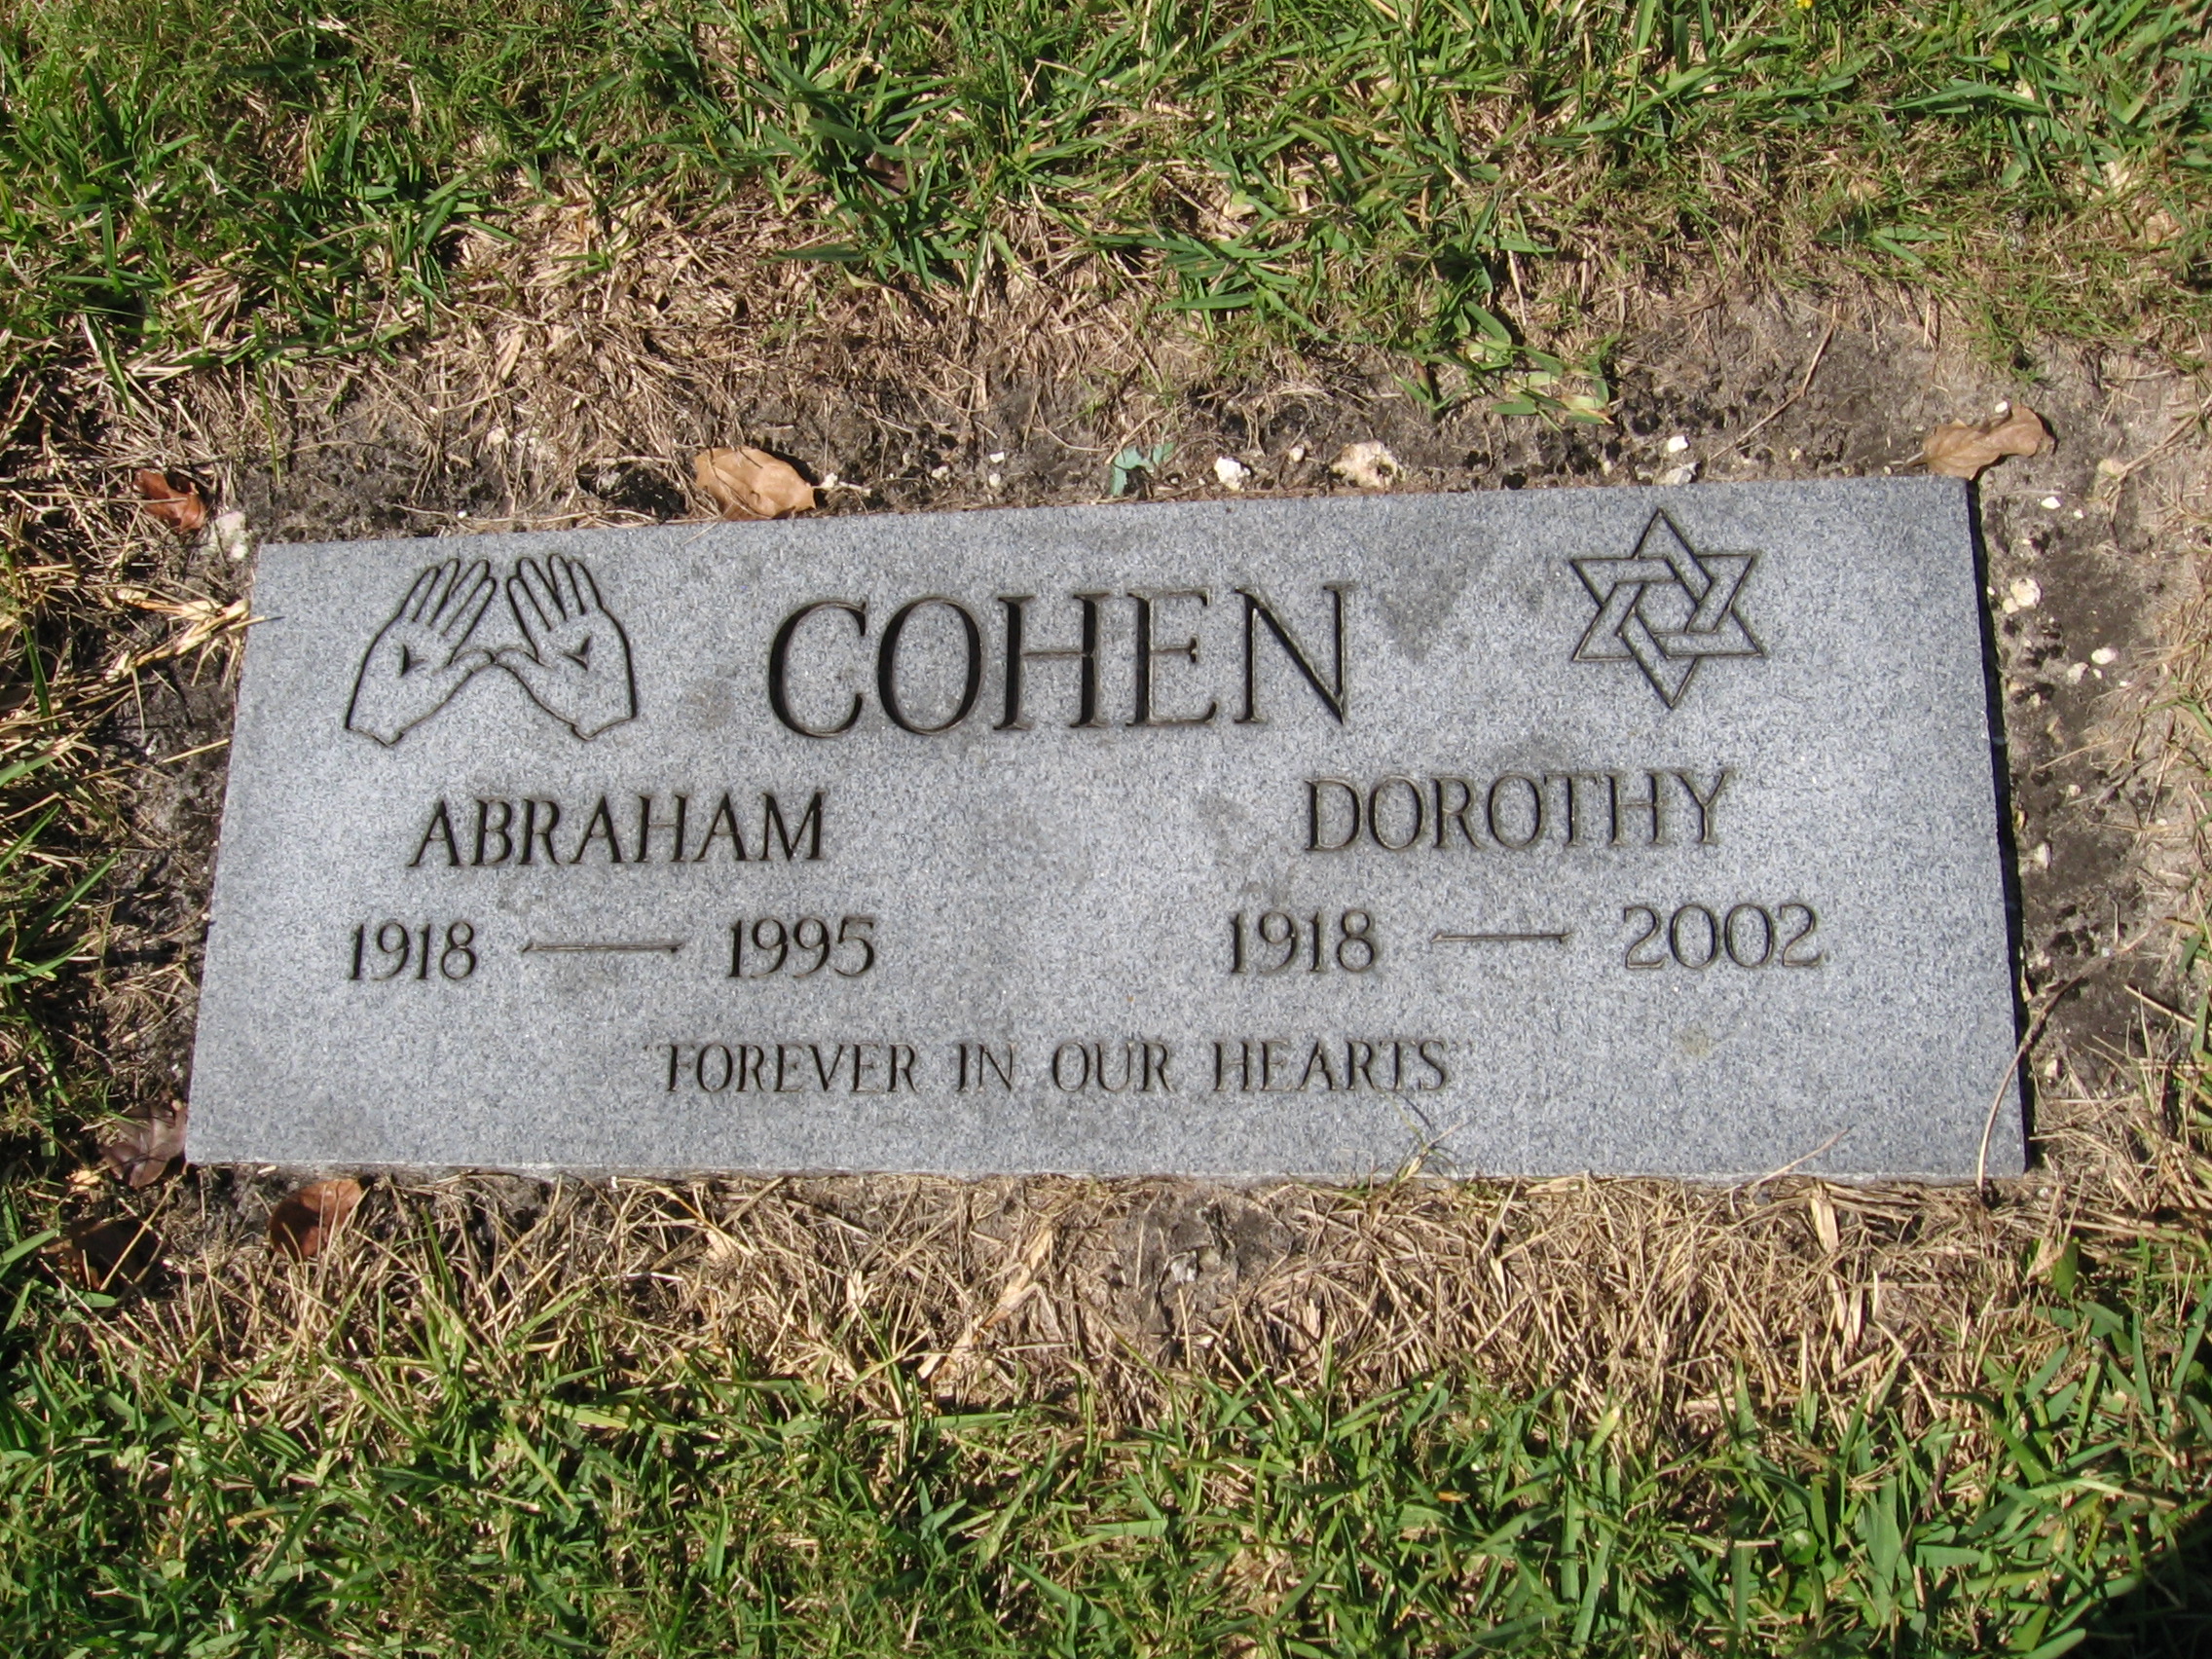 Dorothy Cohen